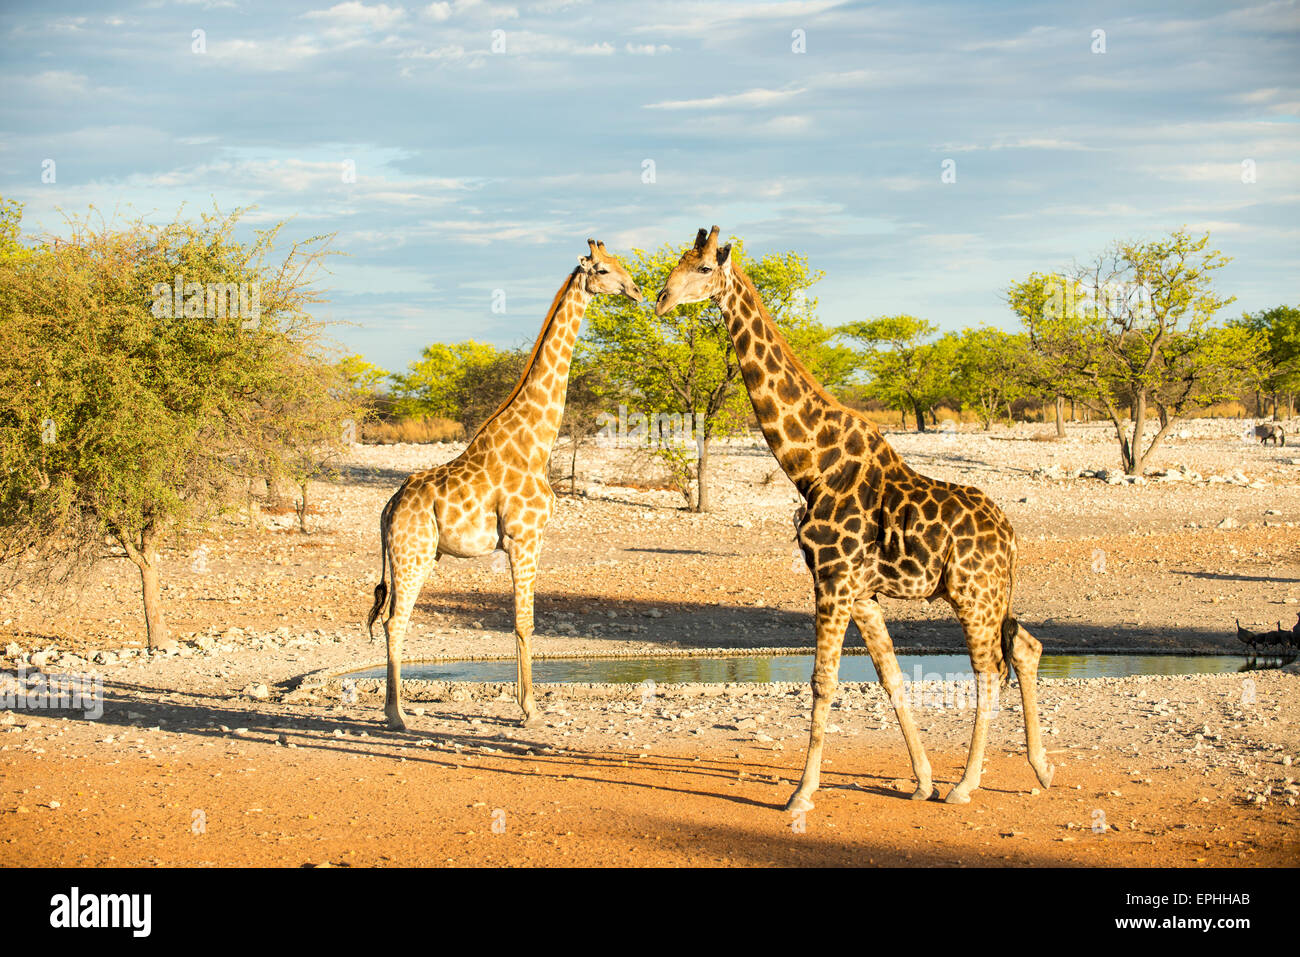 Africa, Namibia. Anderson Camp near Etosha National Park. Full body shot of two giraffes standing. Stock Photo